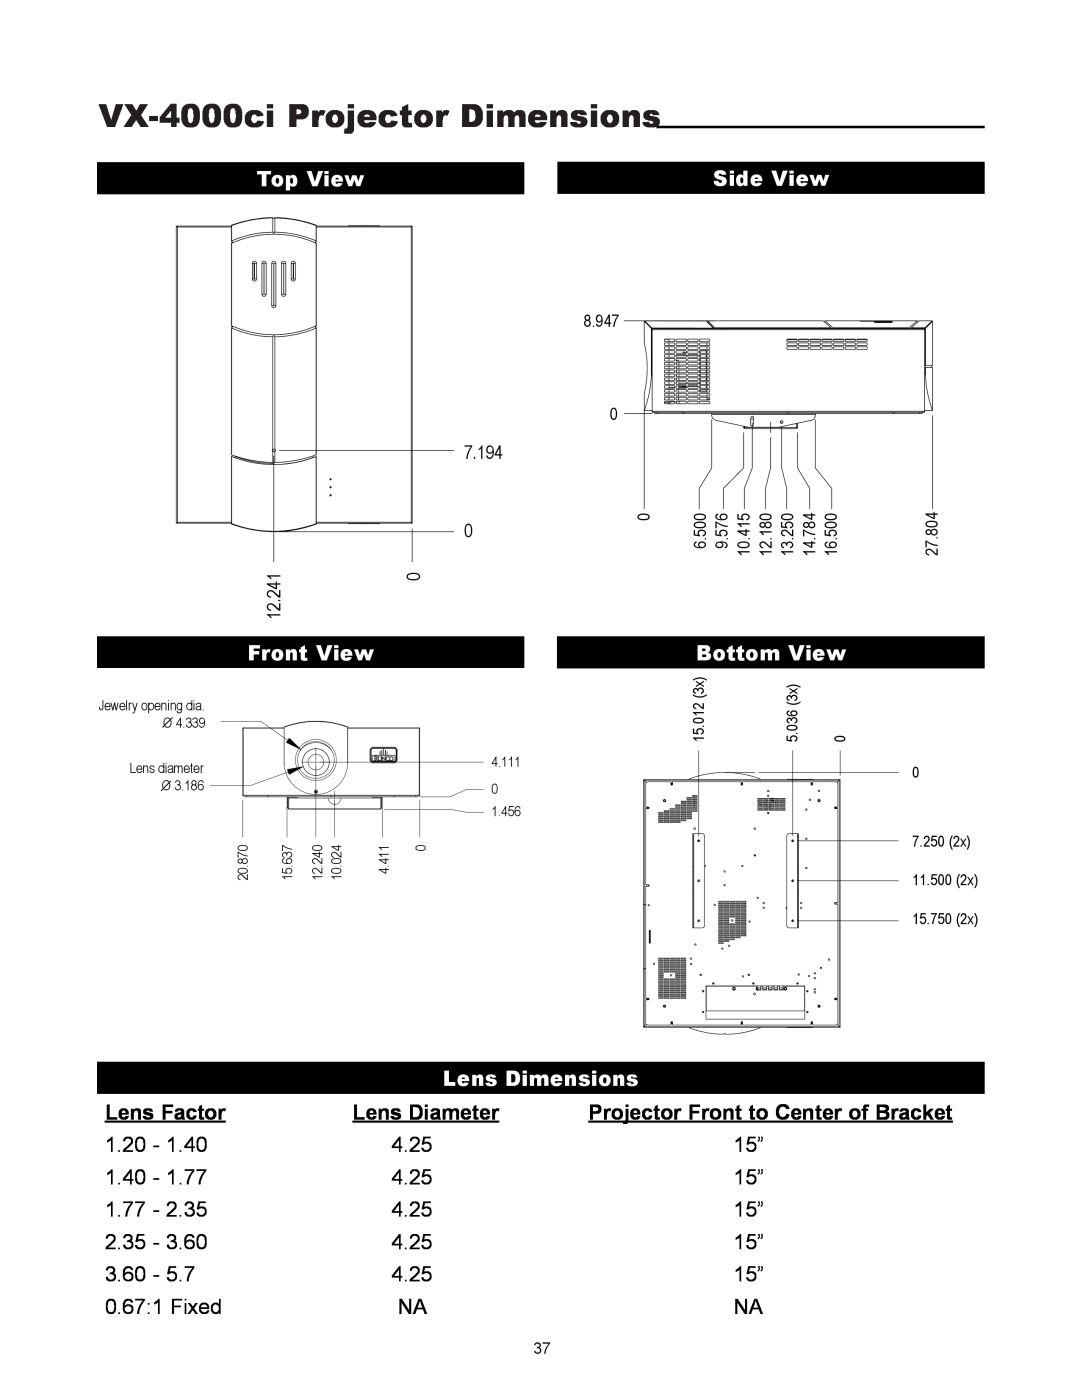 Runco VX-4000ci Projector Dimensions, Lens Dimensions, Lens Factor, Lens Diameter, Projector Front to Center of Bracket 